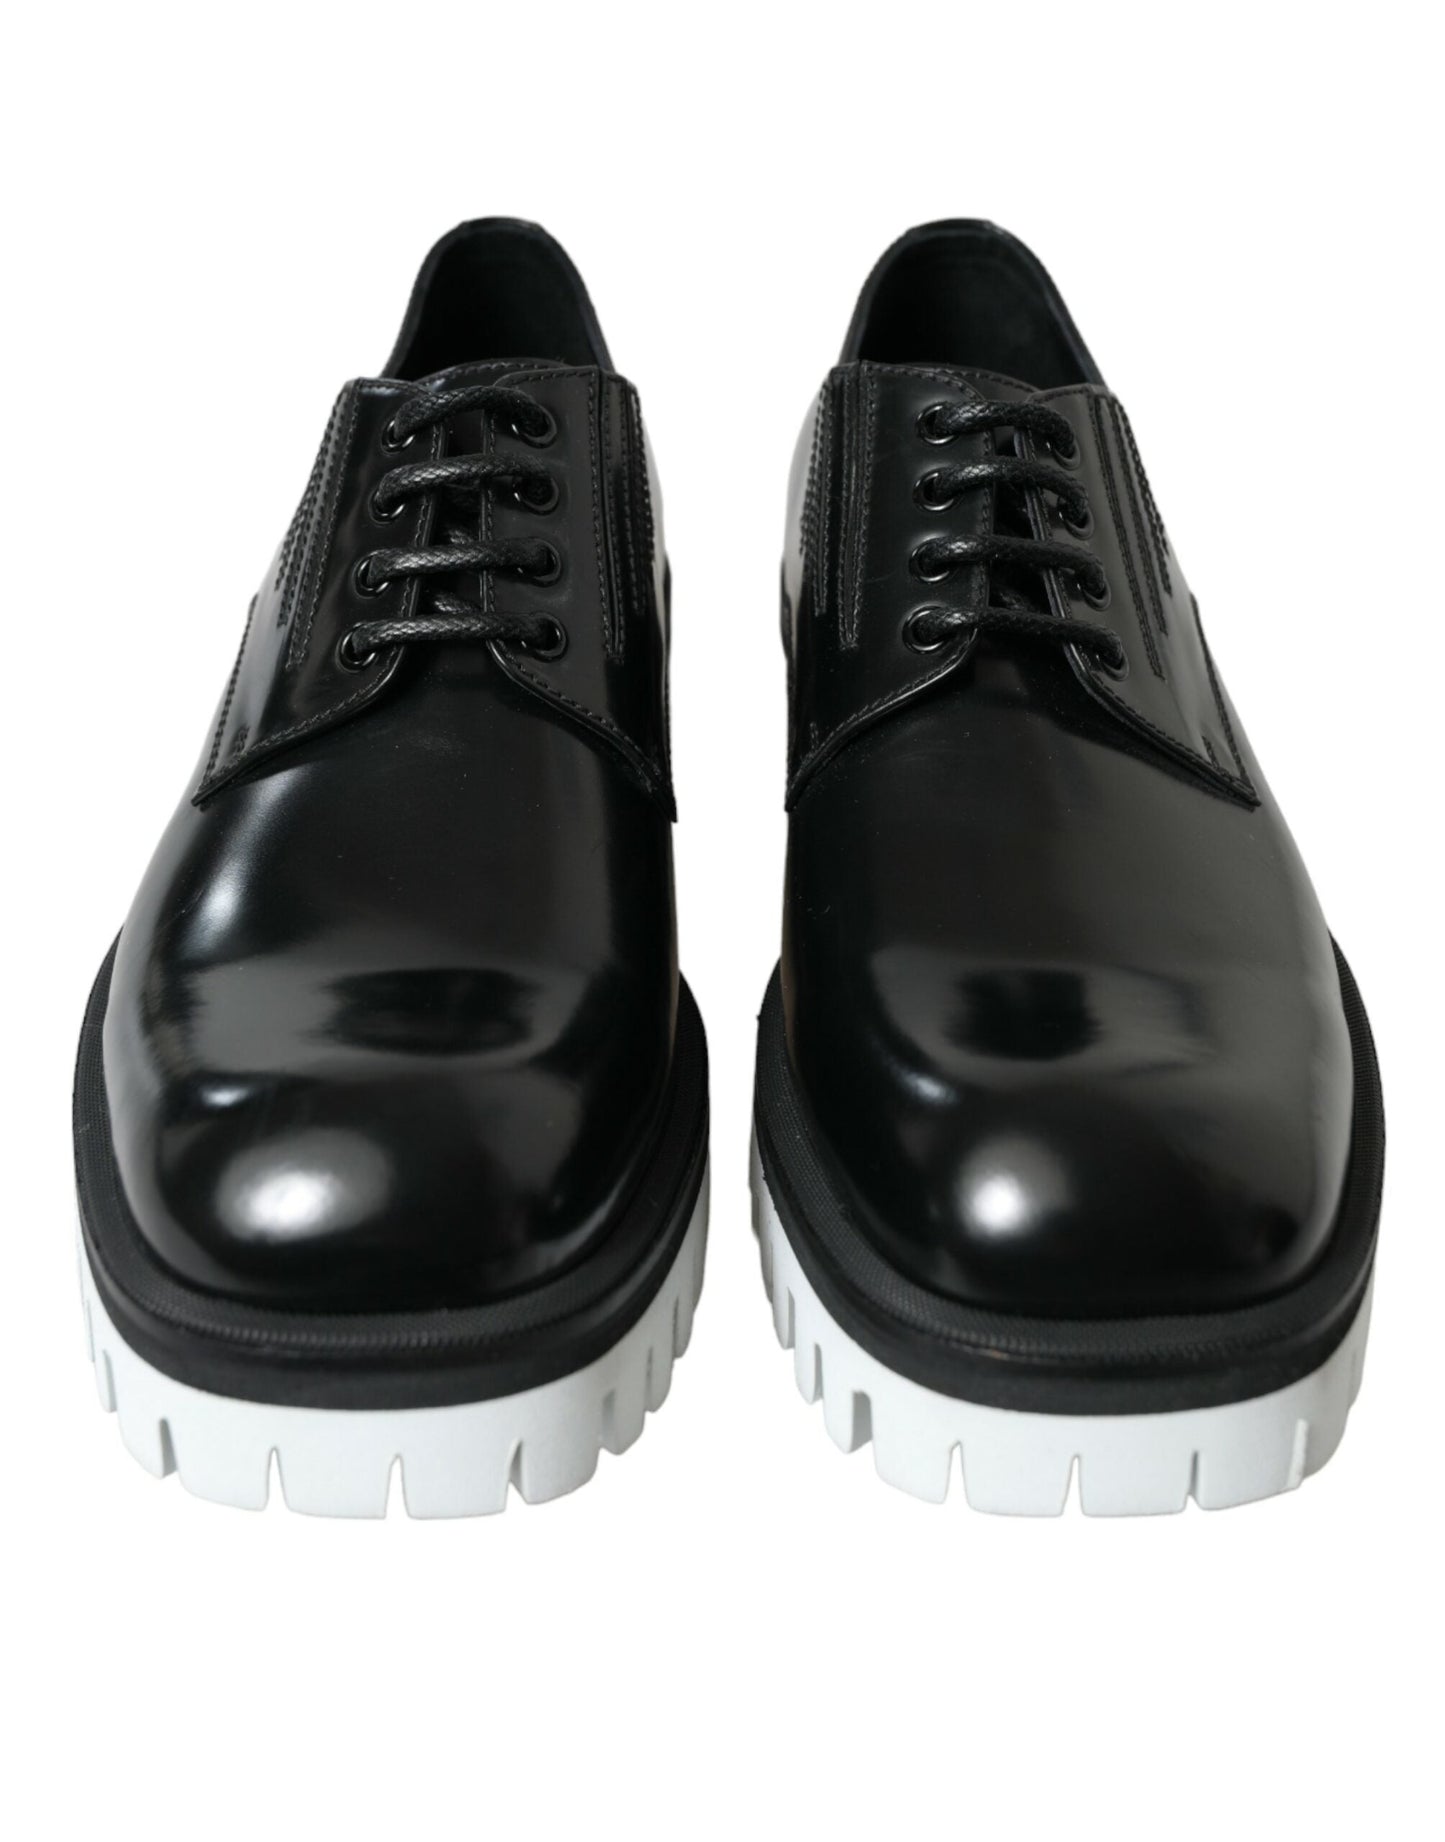 Dolce & Gabbana Black White Leather Lace Up Derby Dress Shoes | Fashionsarah.com